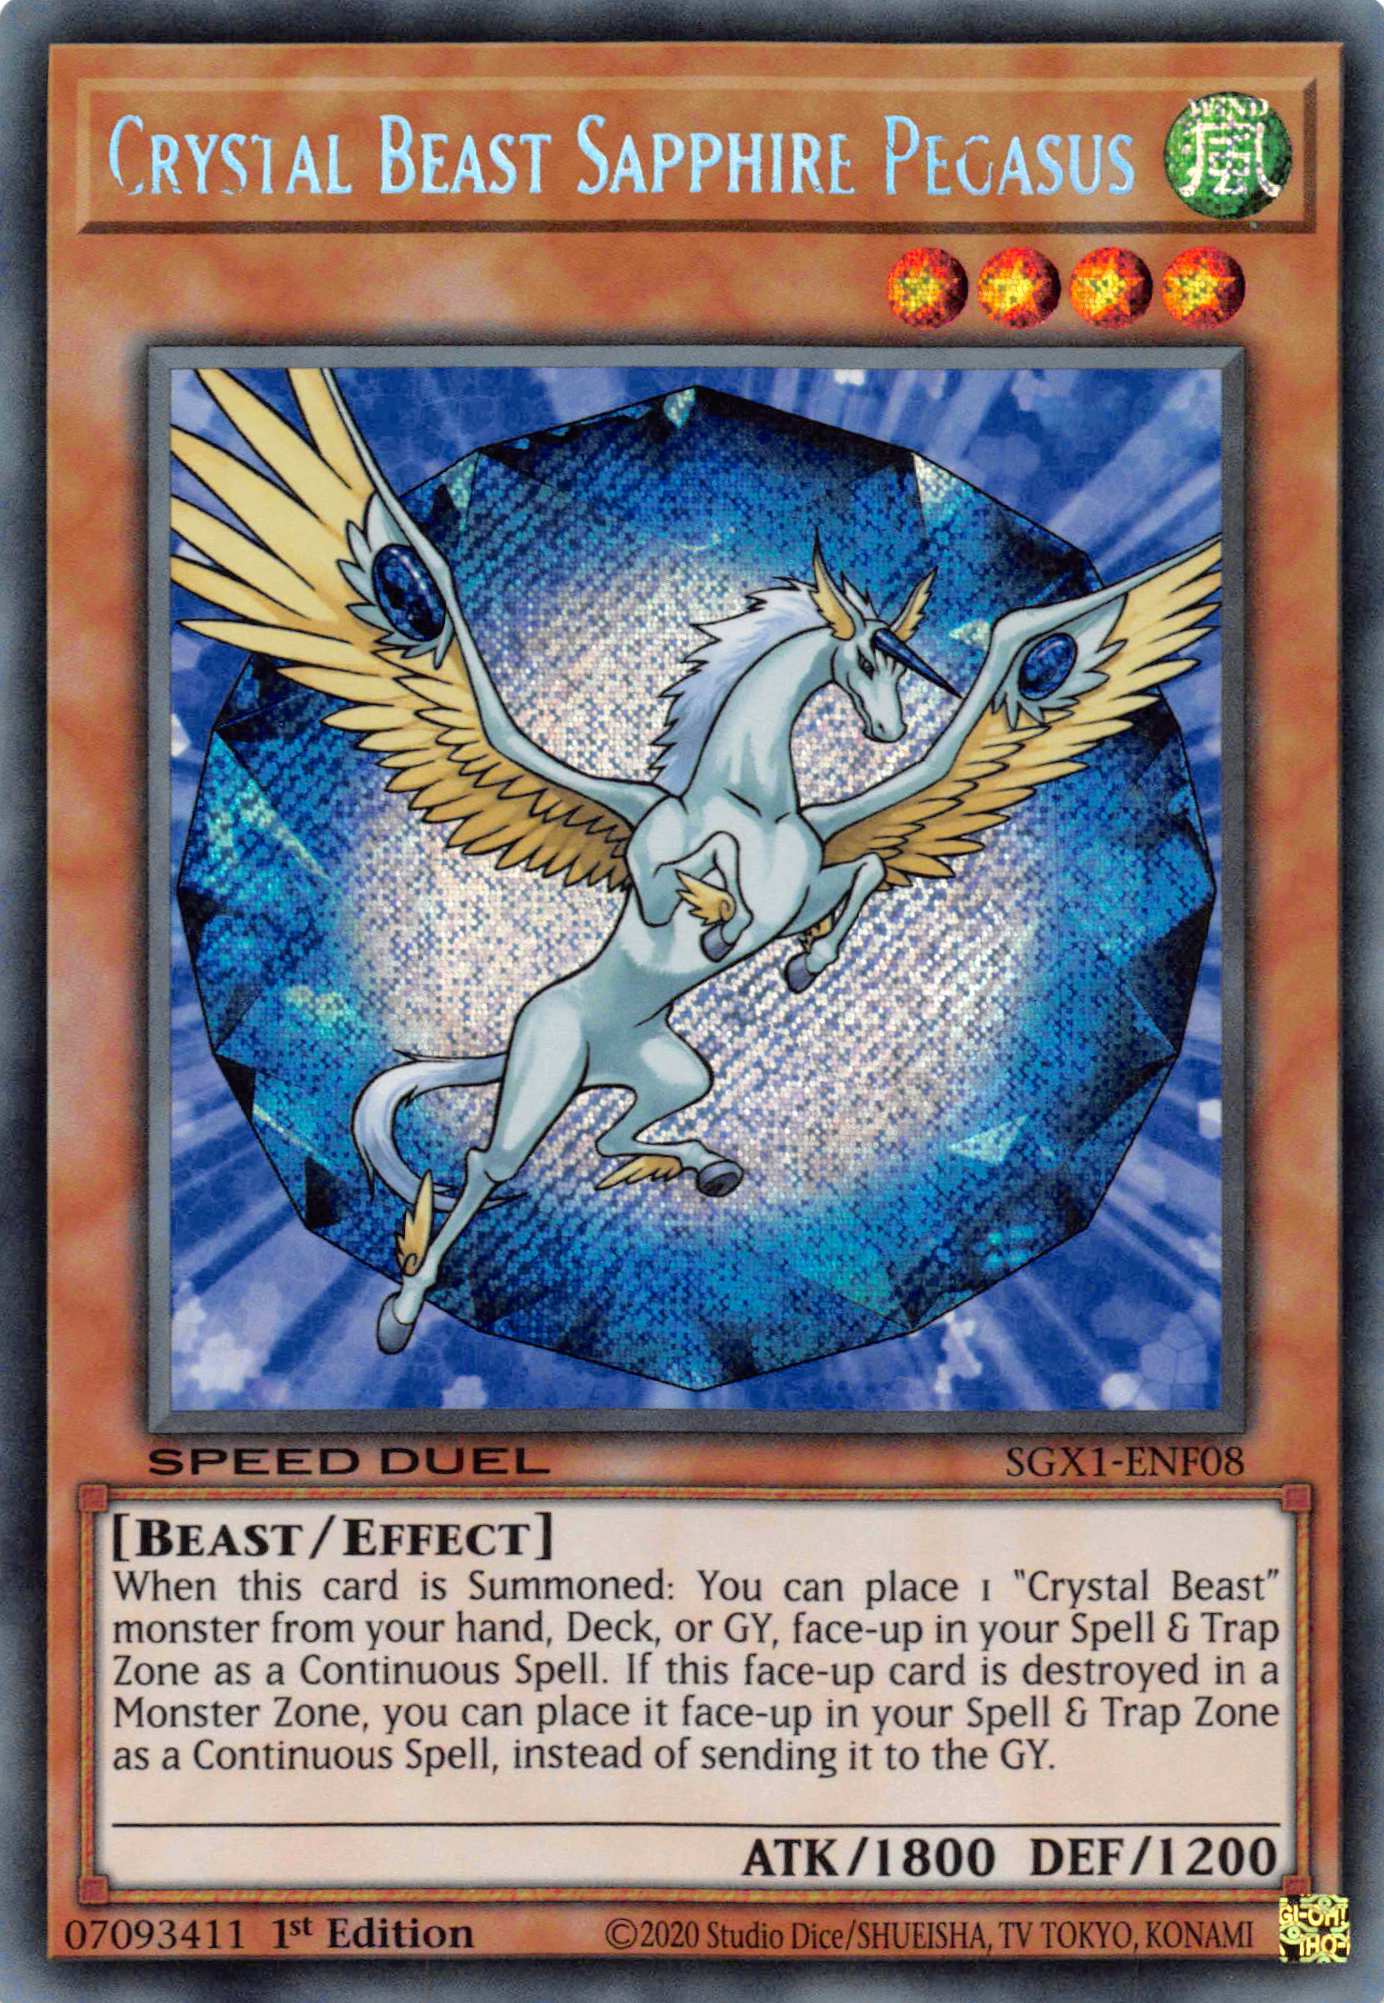 Crystal Beast Sapphire Pegasus [SGX1-ENF08] Secret Rare